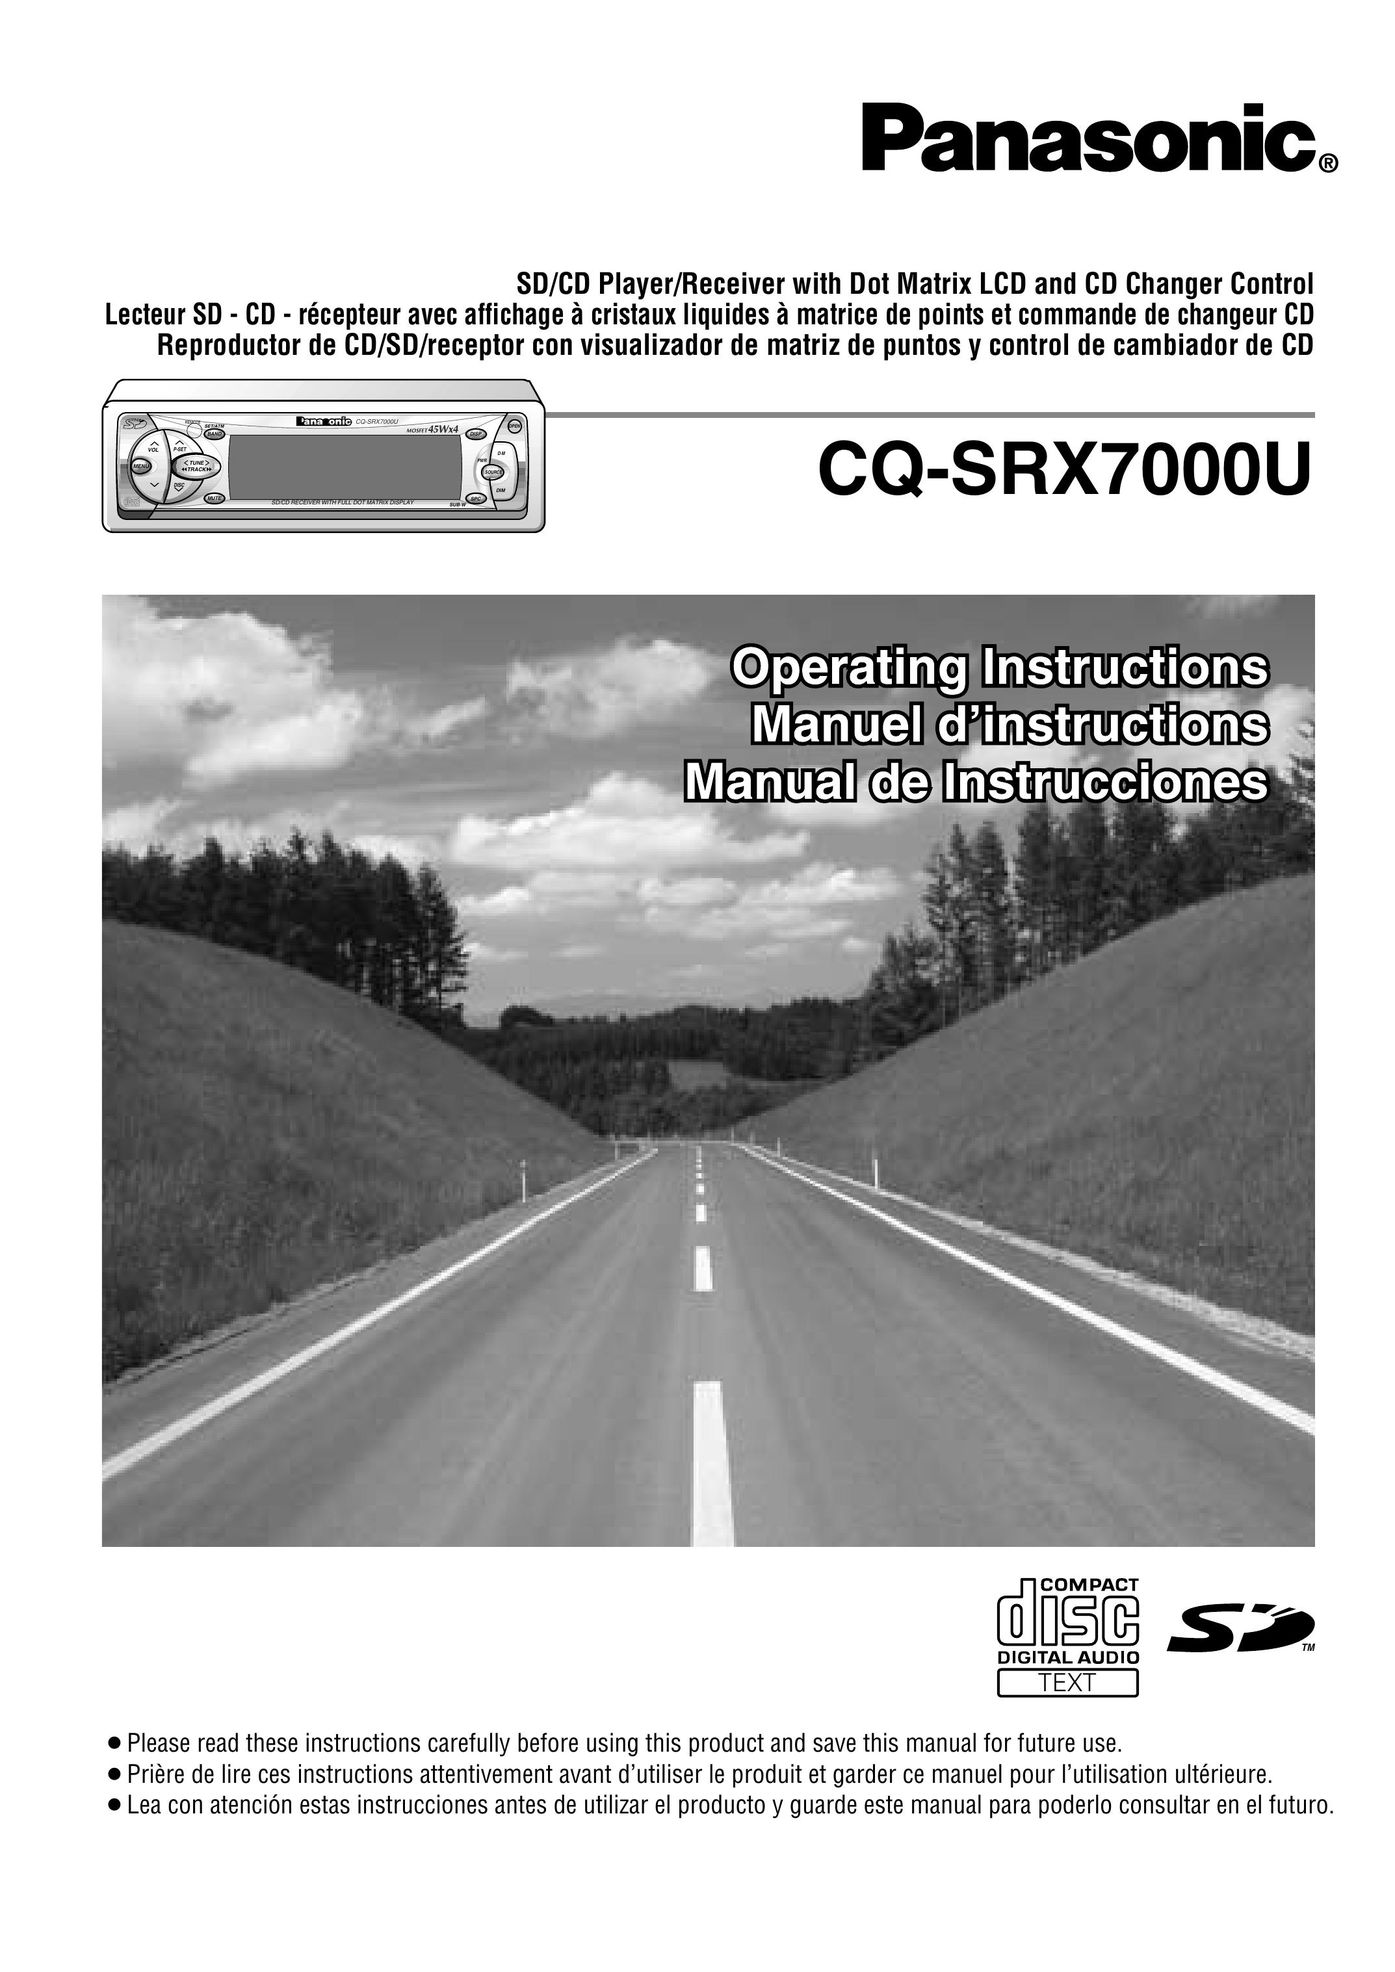 Panasonic CQ-SRX7000U CD Player User Manual